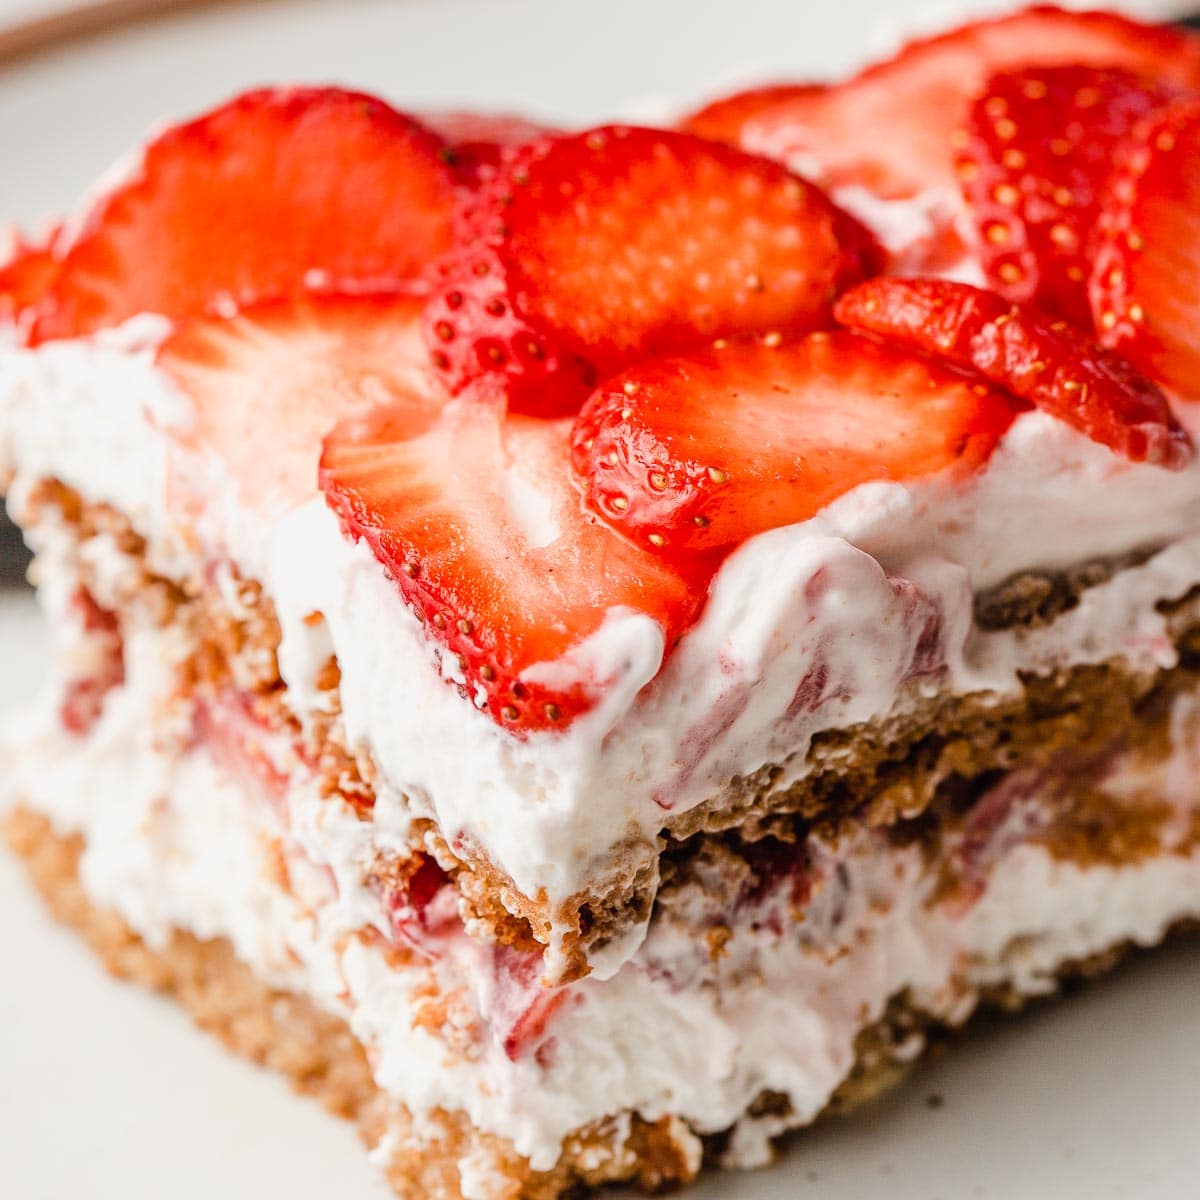 Strawberry Icebox Cake Recipe